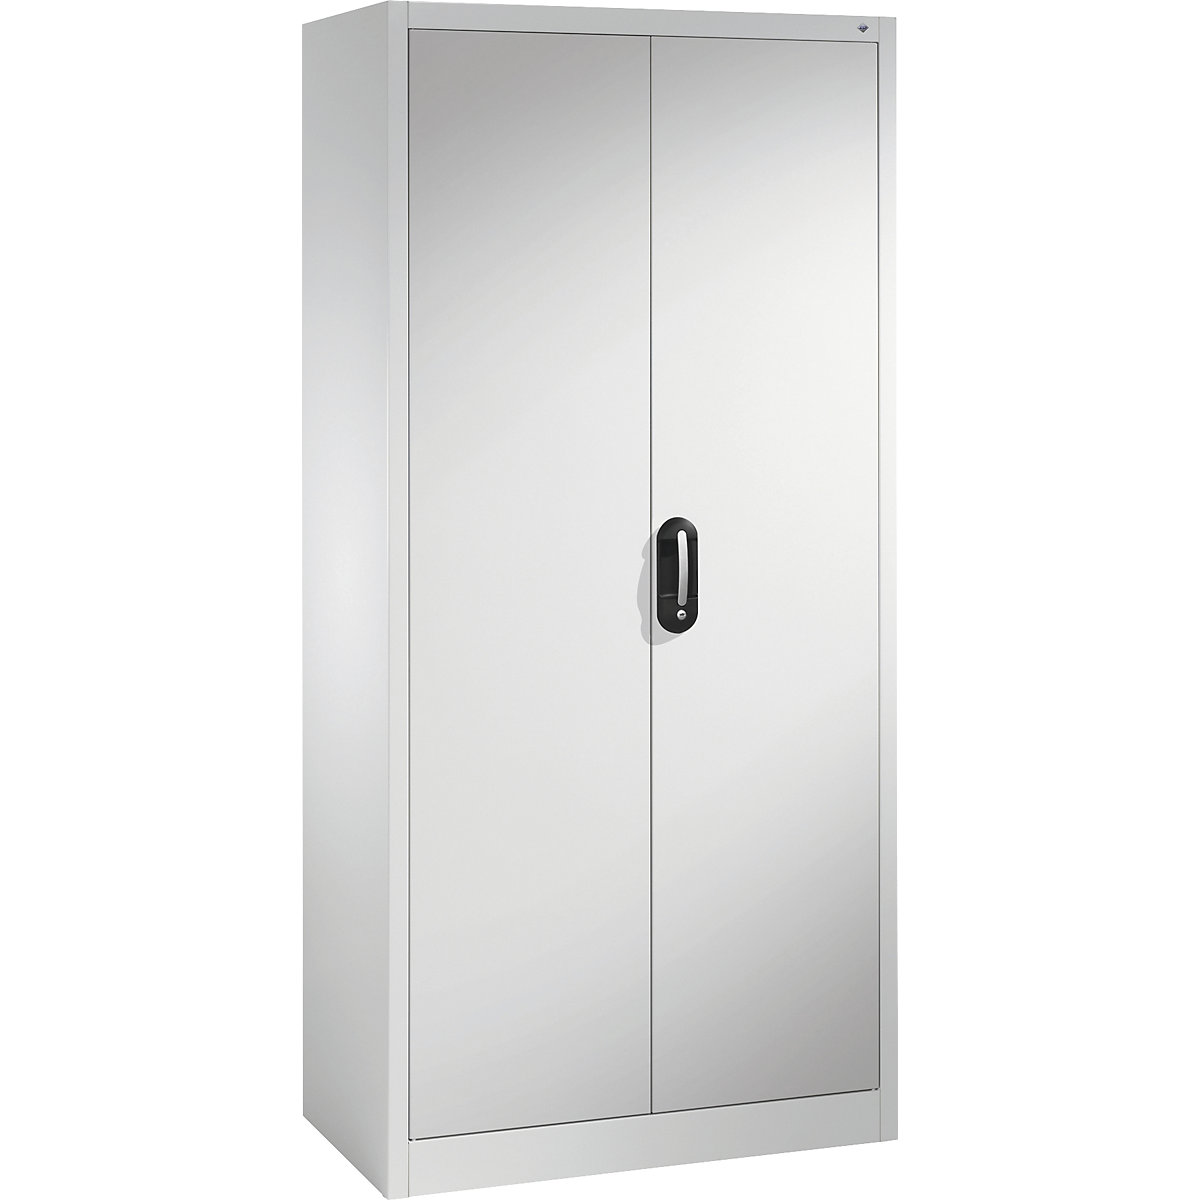 ACURADO universal cupboard – C+P, WxD 930 x 400 mm, light grey / white aluminium, 2+ items-30